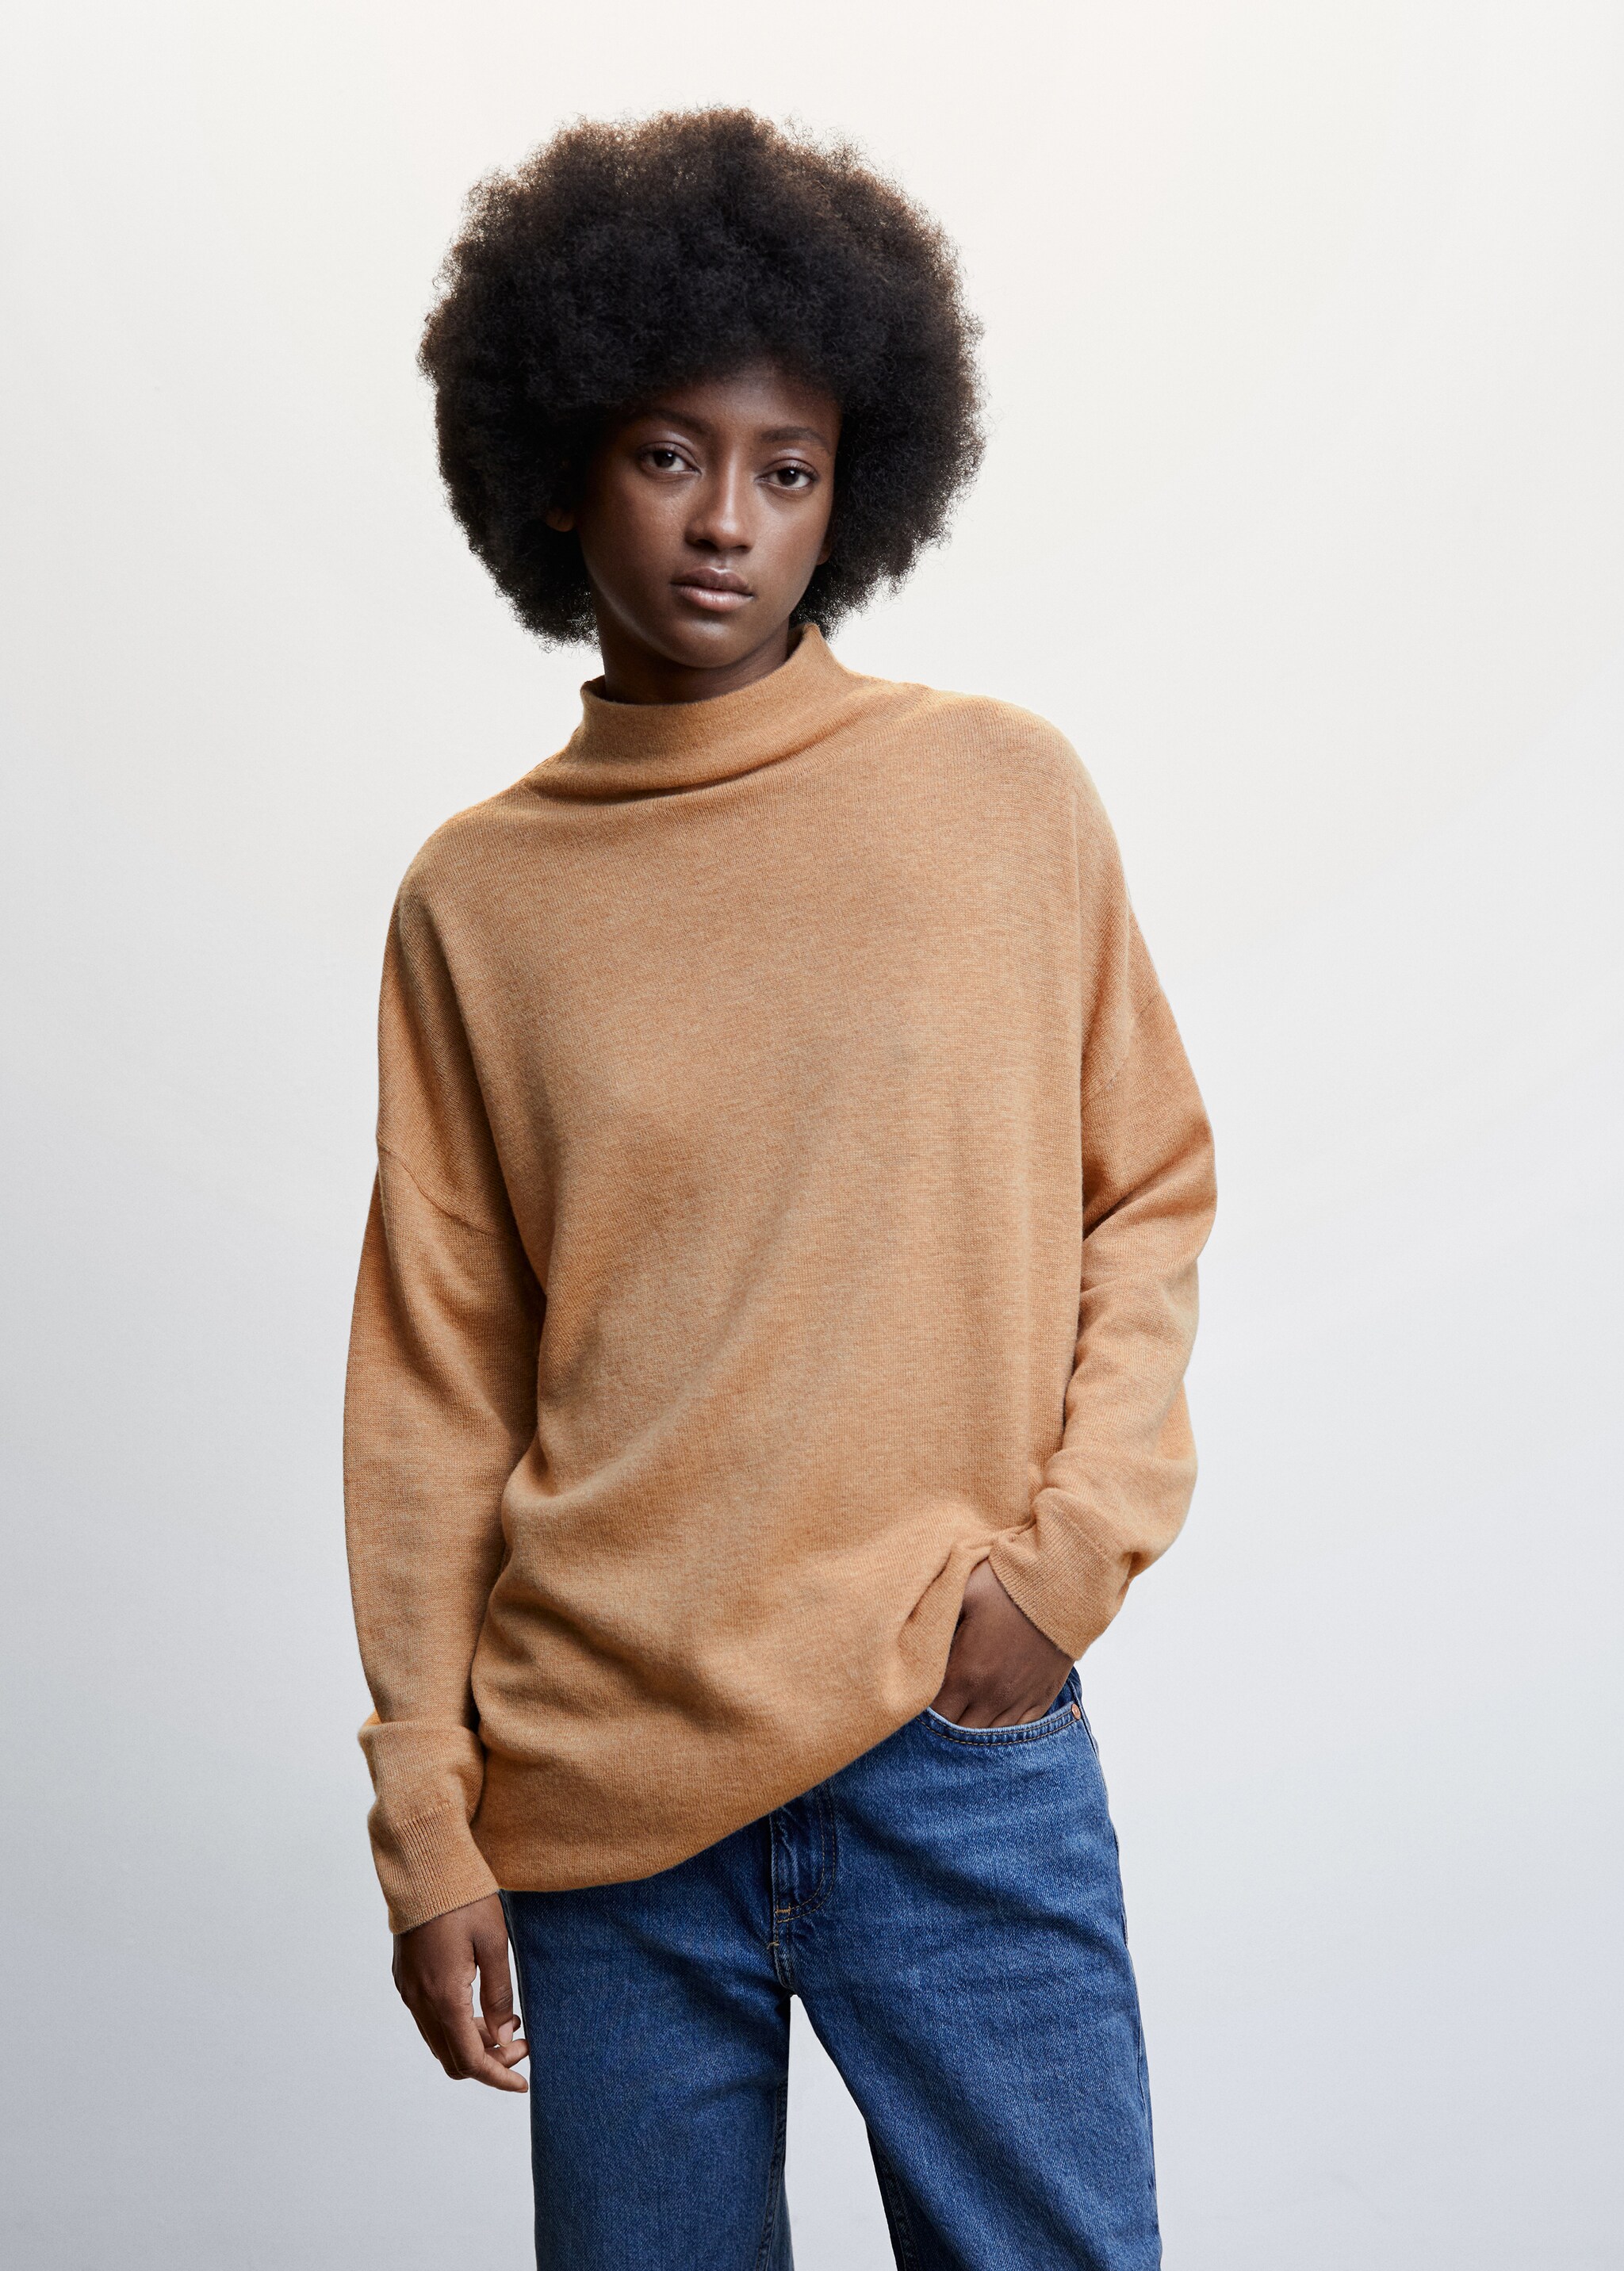 100% wool perkins collar sweater - Medium plane